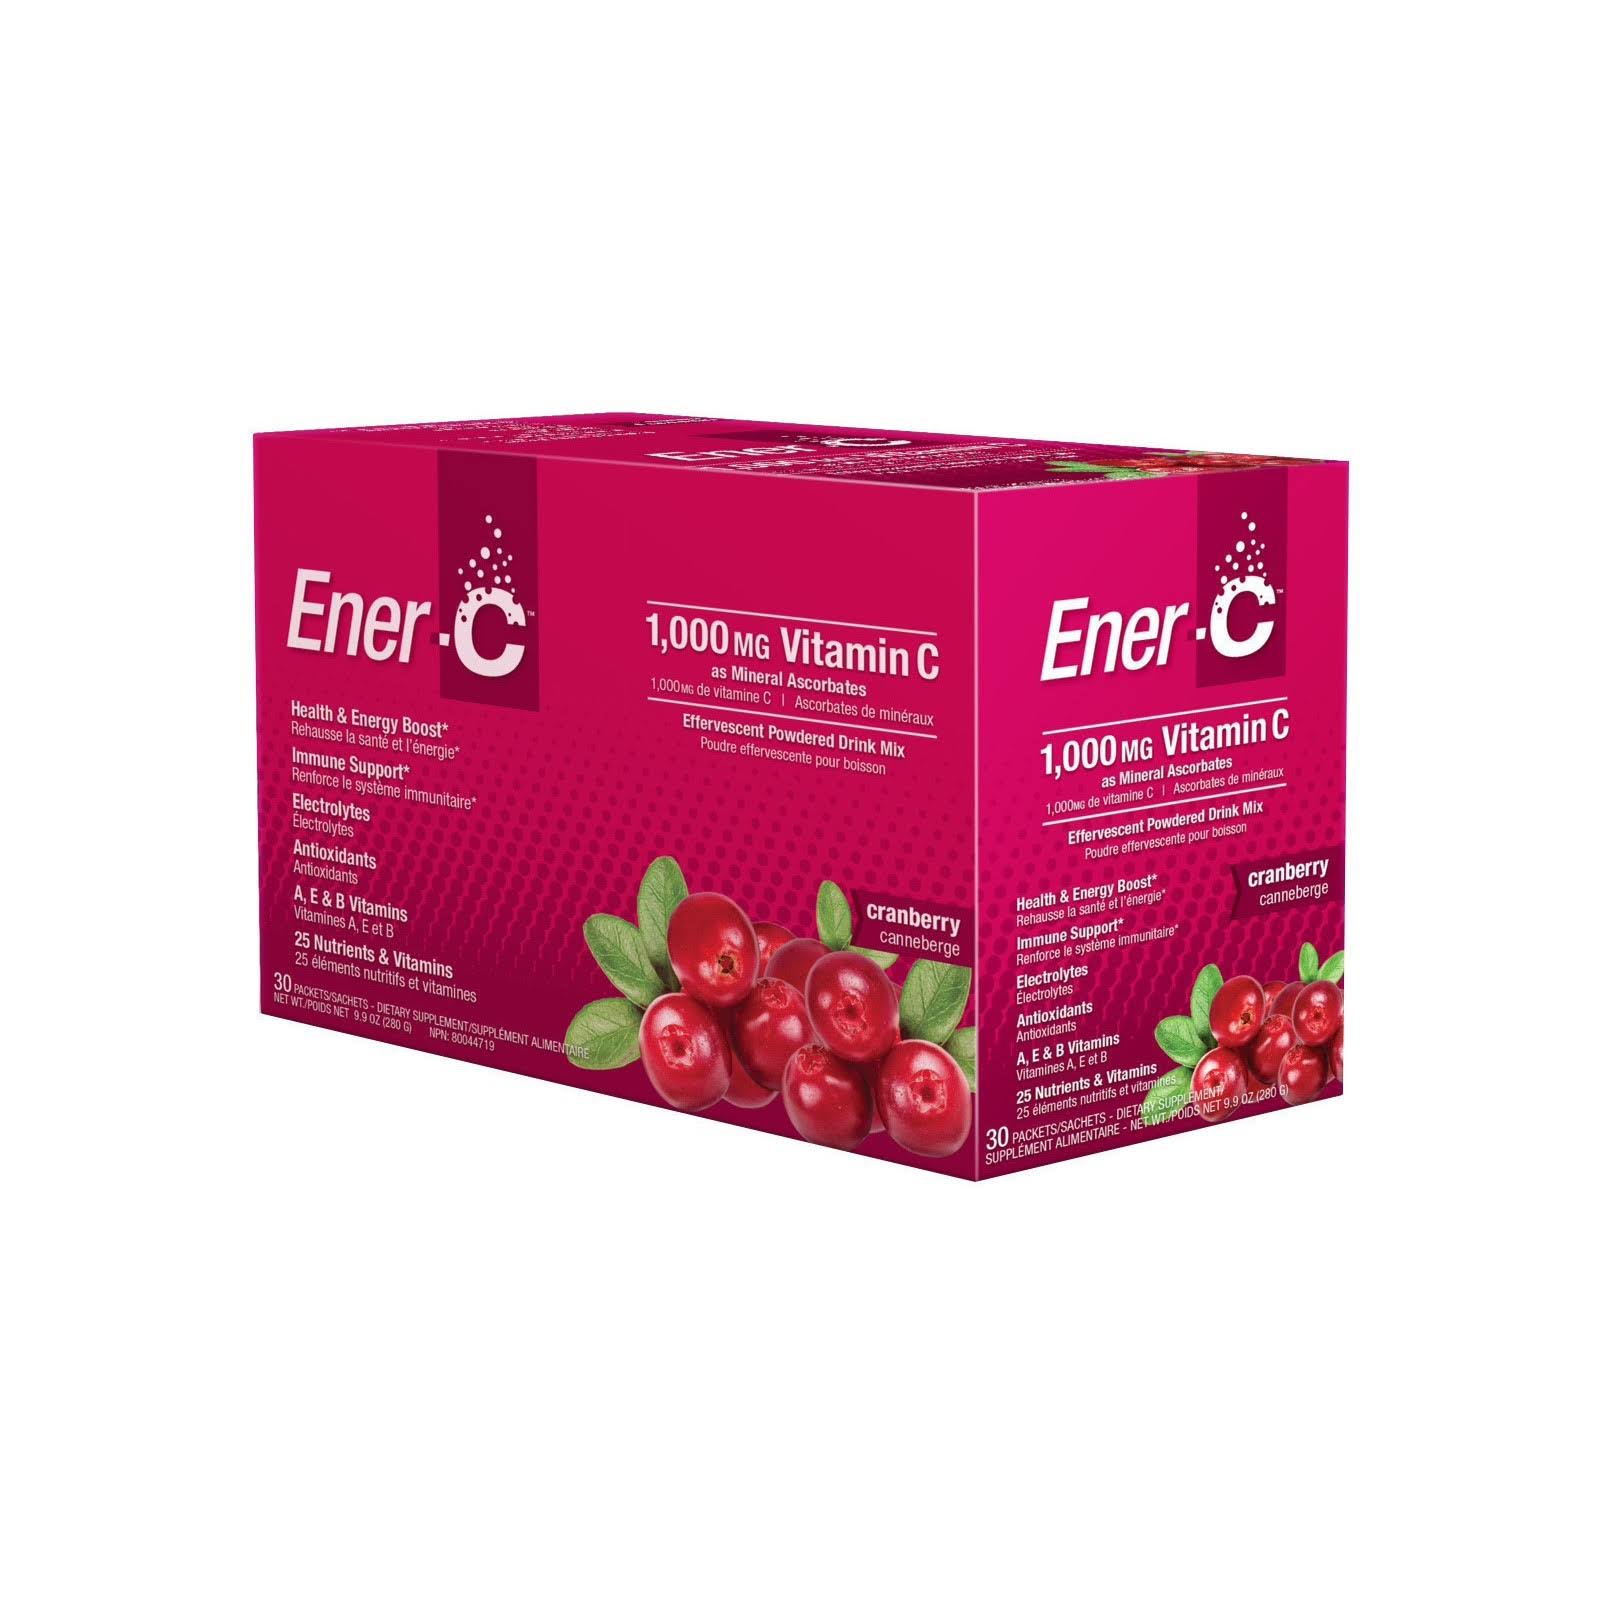 Ener-C Vitamin C Effervescent Drink Mix - Cranberry, 1000mg, 30pk